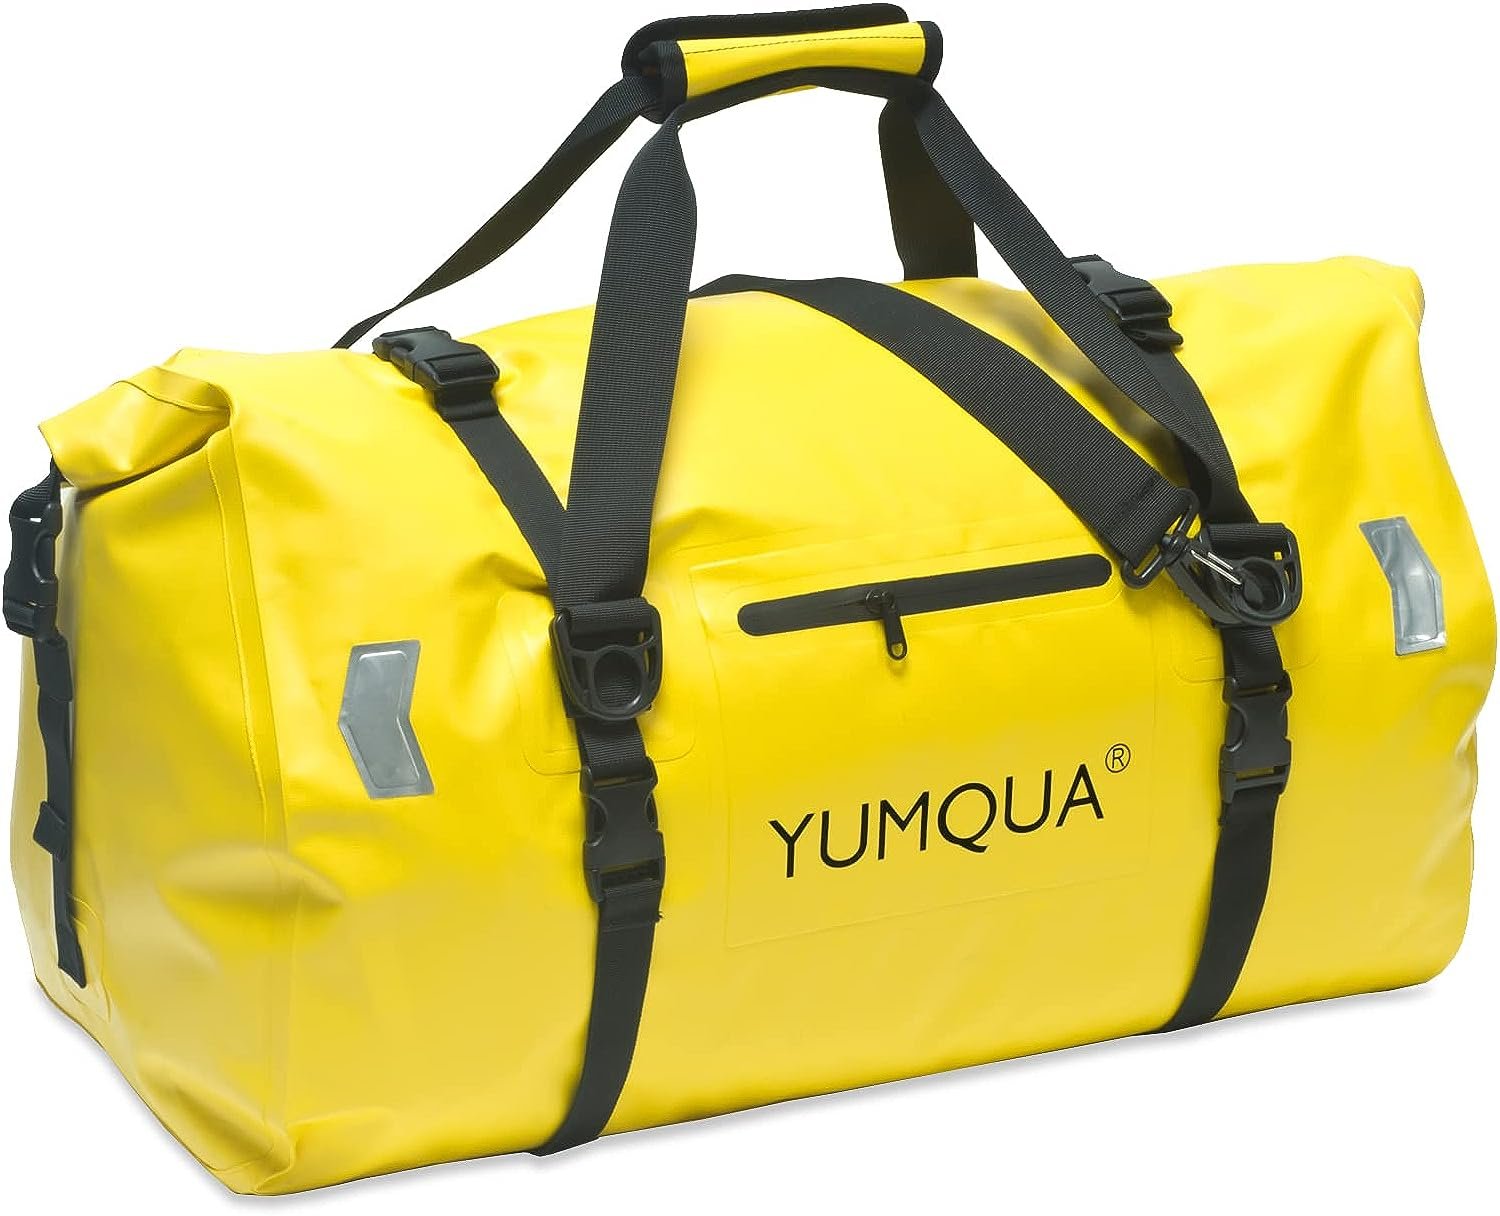 YUMQUA Waterproof Duffel Bag Review